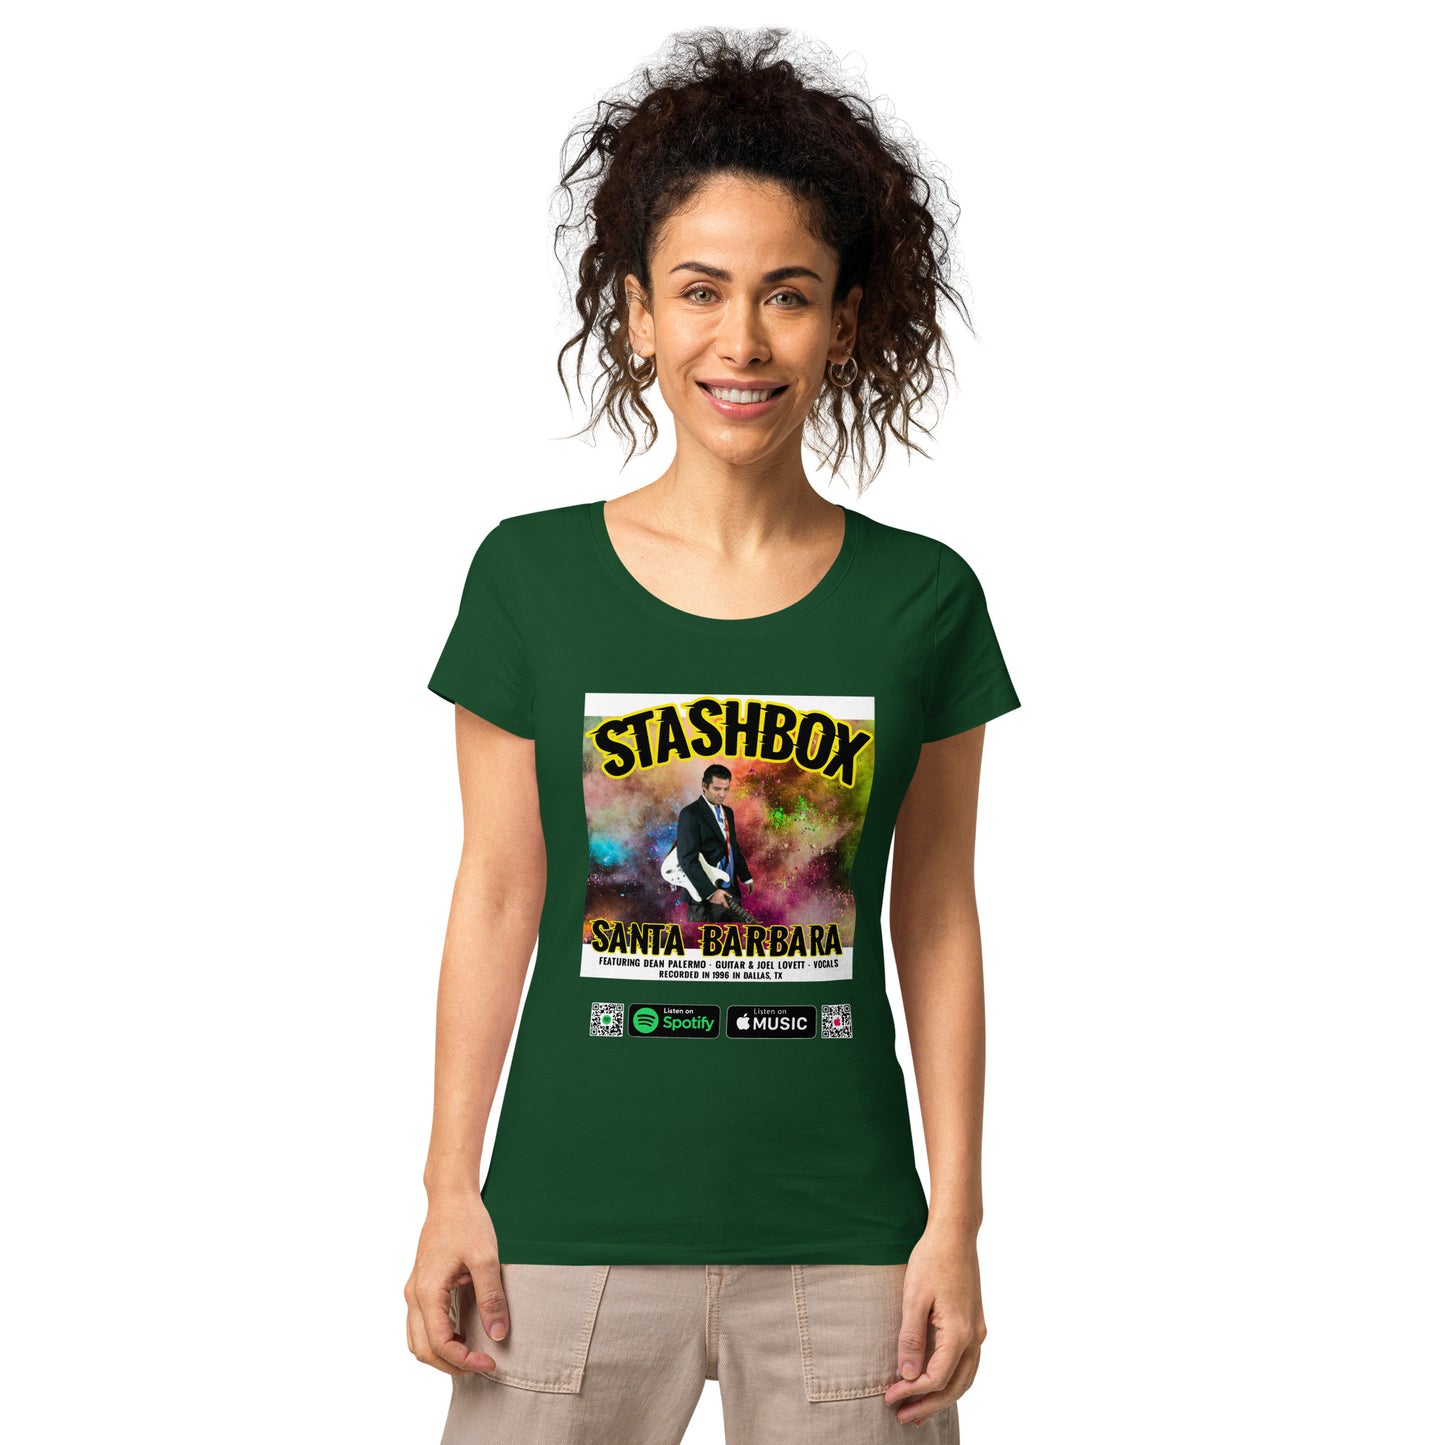 Santa Barbara Shoreline: Stashbox Women’s Basic Organic T-Shirt - Design #025. Coastal charm, exclusively at Stashbox.ai.